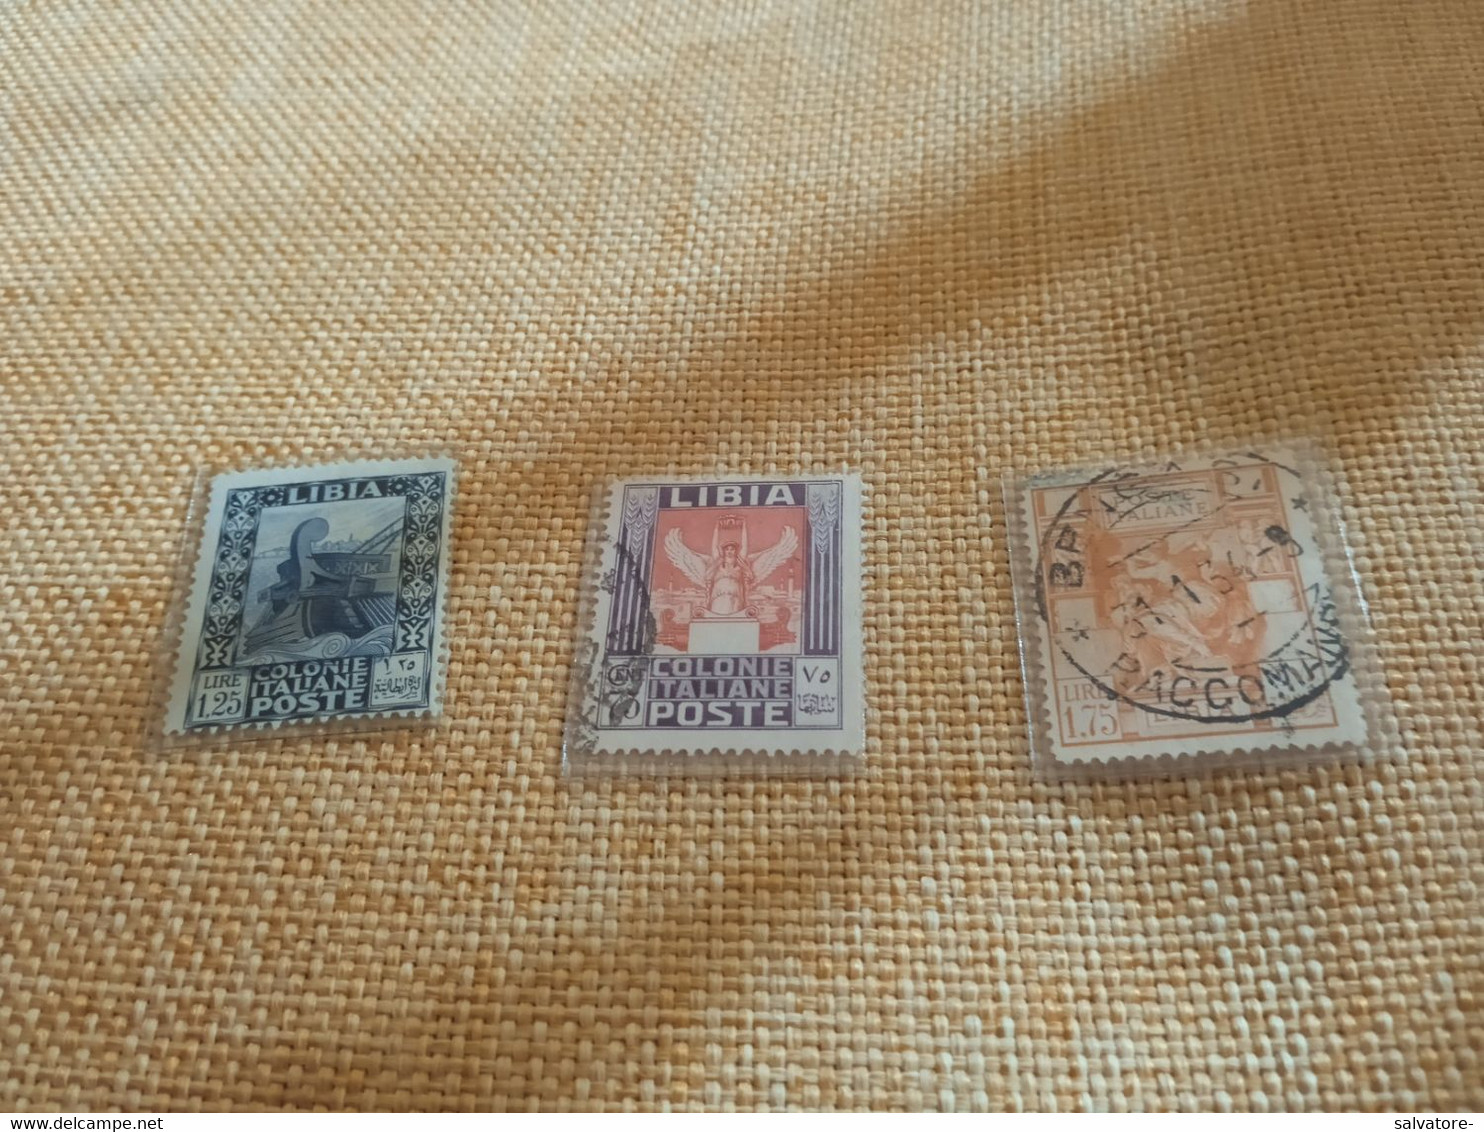 Francobolli LIBIA VALORI LIRE 1,75,1,25,75 CENTESIMI- ANNULLATI - Libya